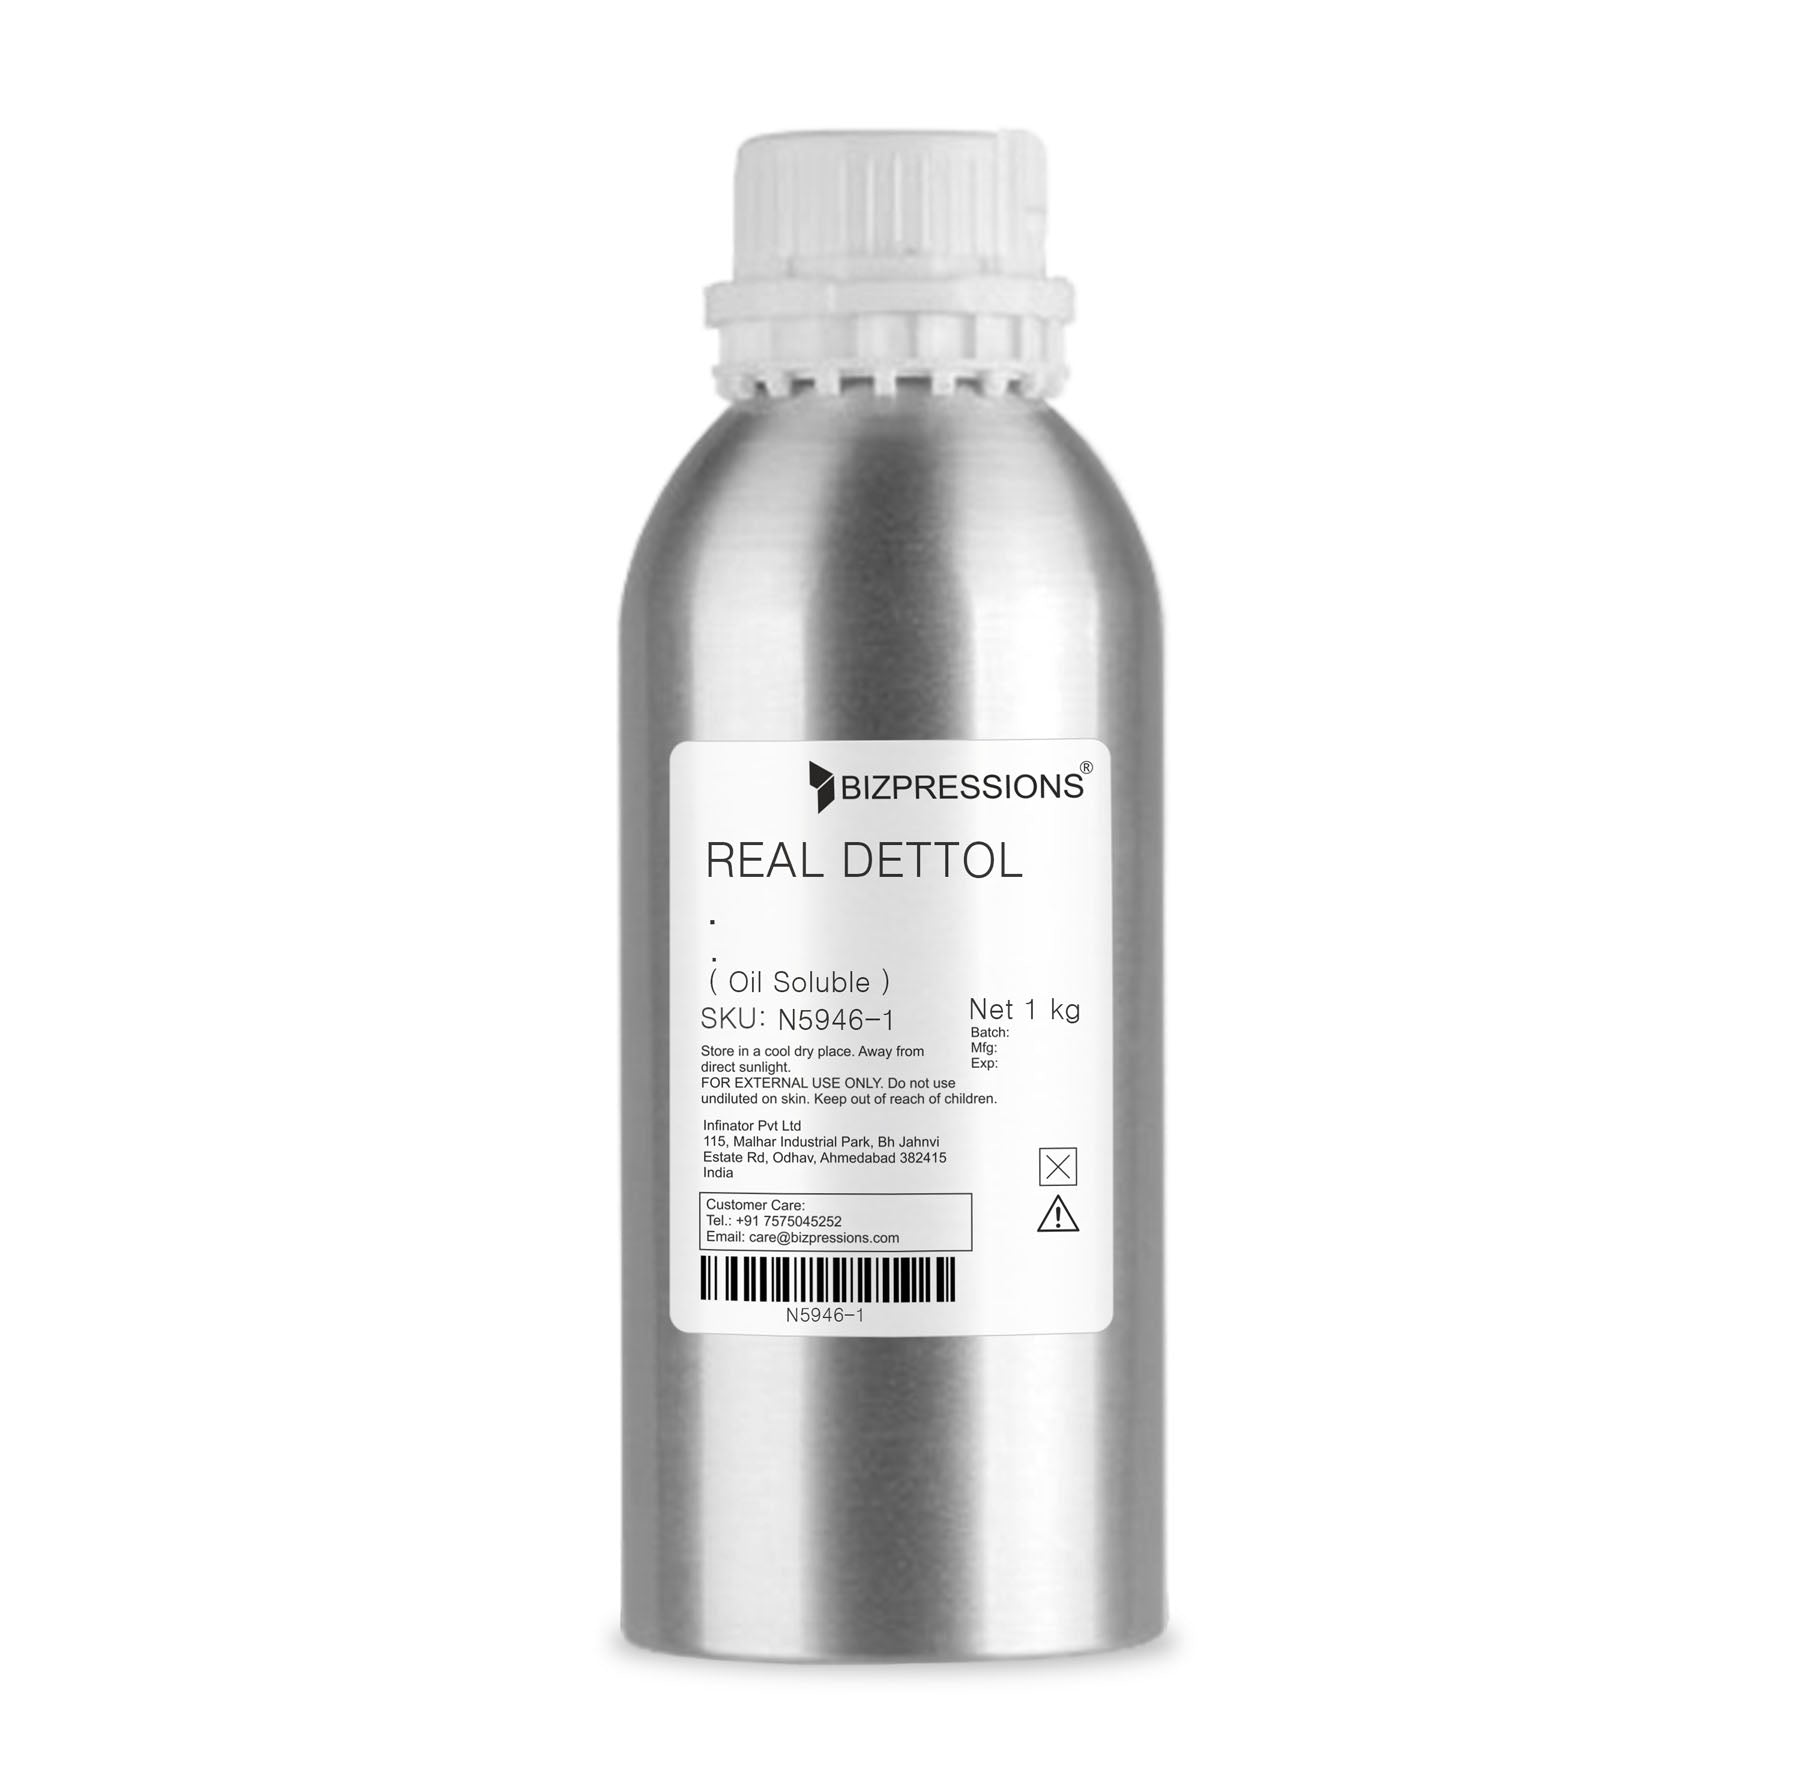 REAL DETTOL - Fragrance ( Oil Soluble ) - 1 kg